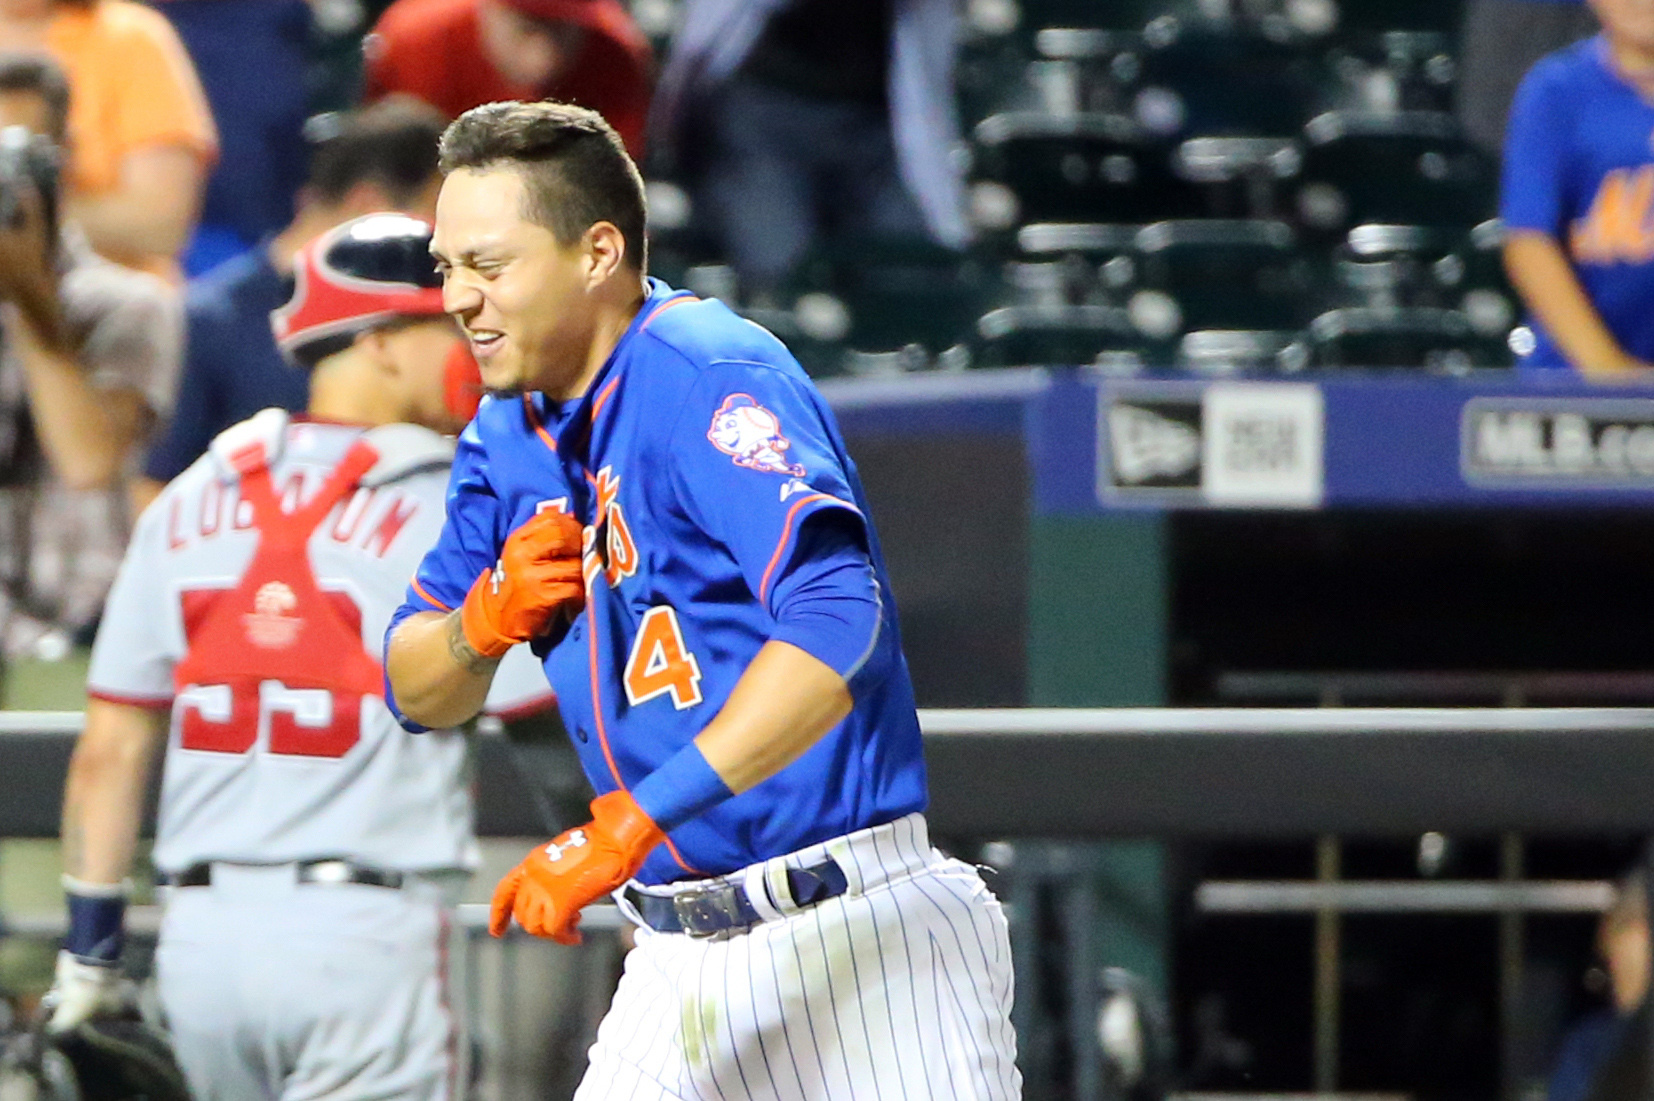 New York Mets: A Look at Johan Santana's Fall from Baseball Glory